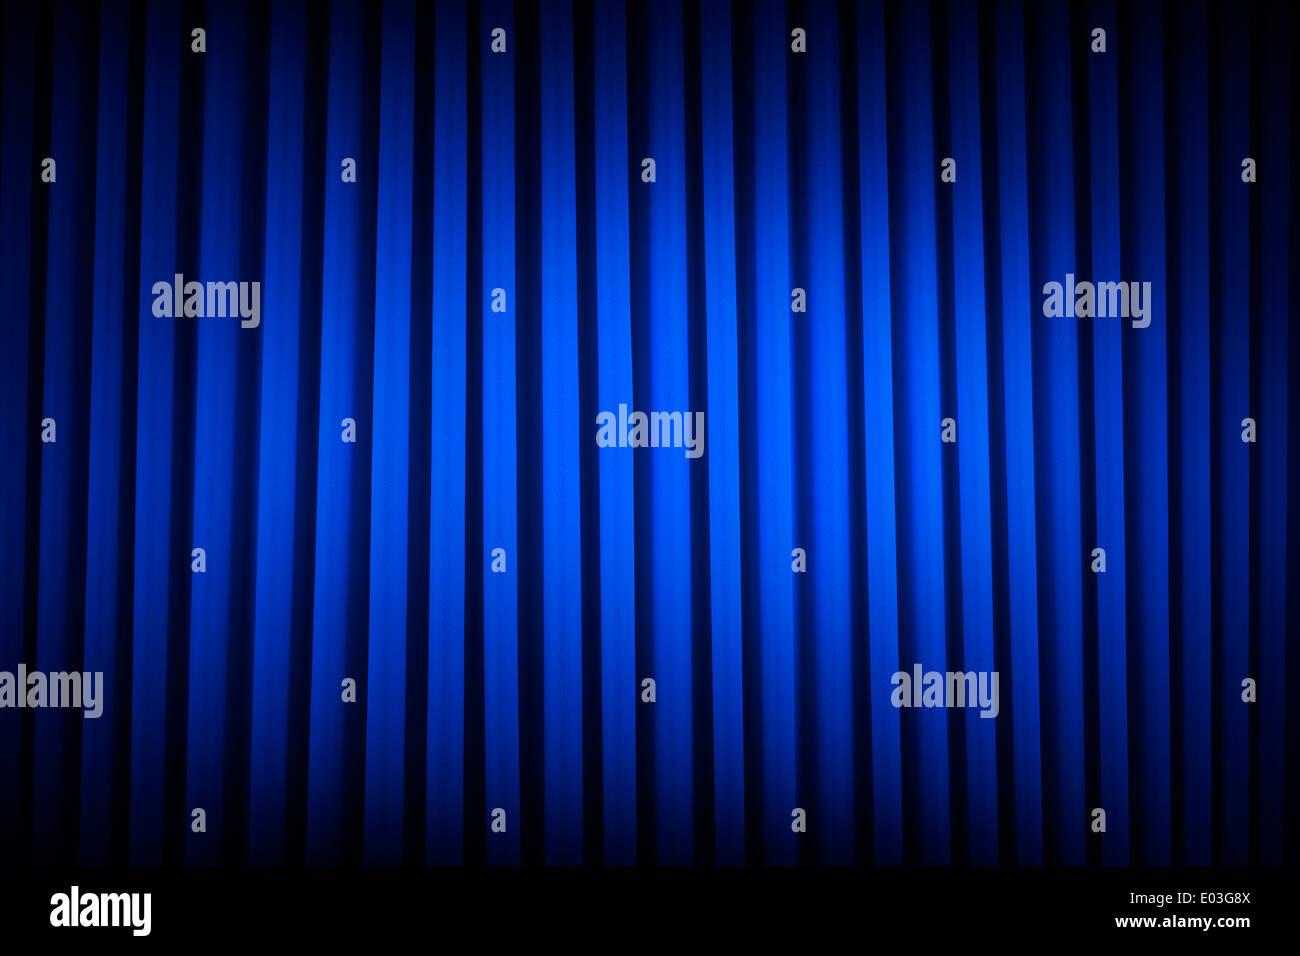 Blue Velvet Movie Curtains Dim Lit Backgrounds. Stock Photo